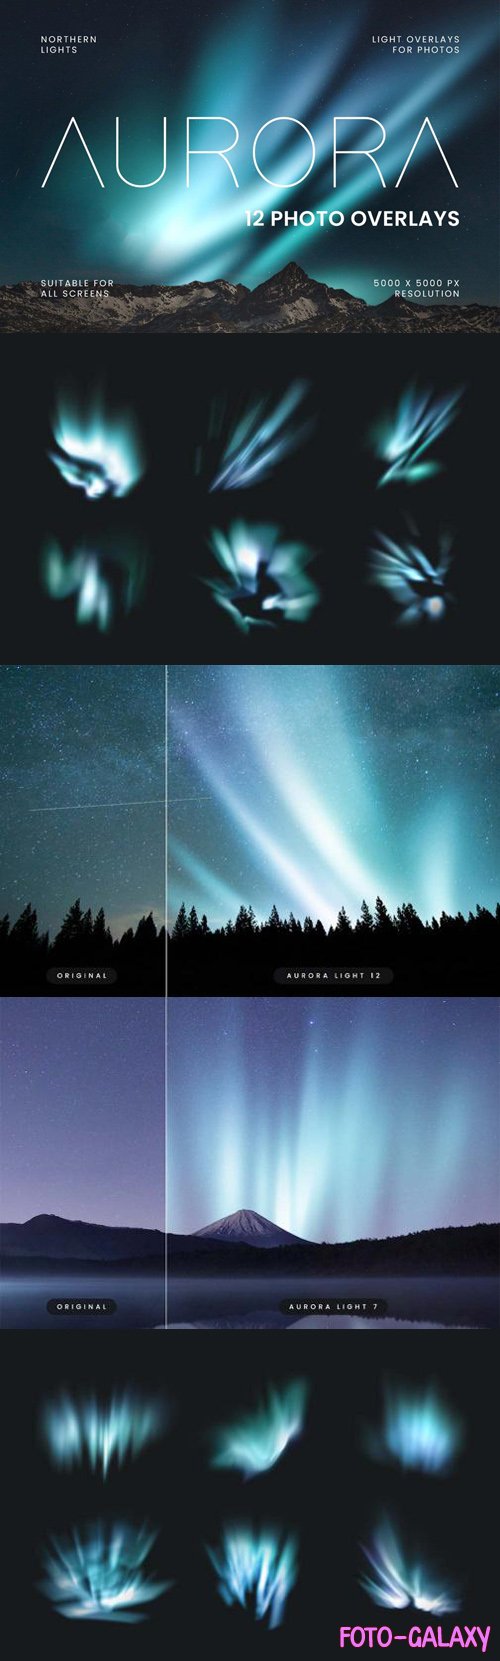 Aurora - 12 Northern Lights Overlays for Photoshop